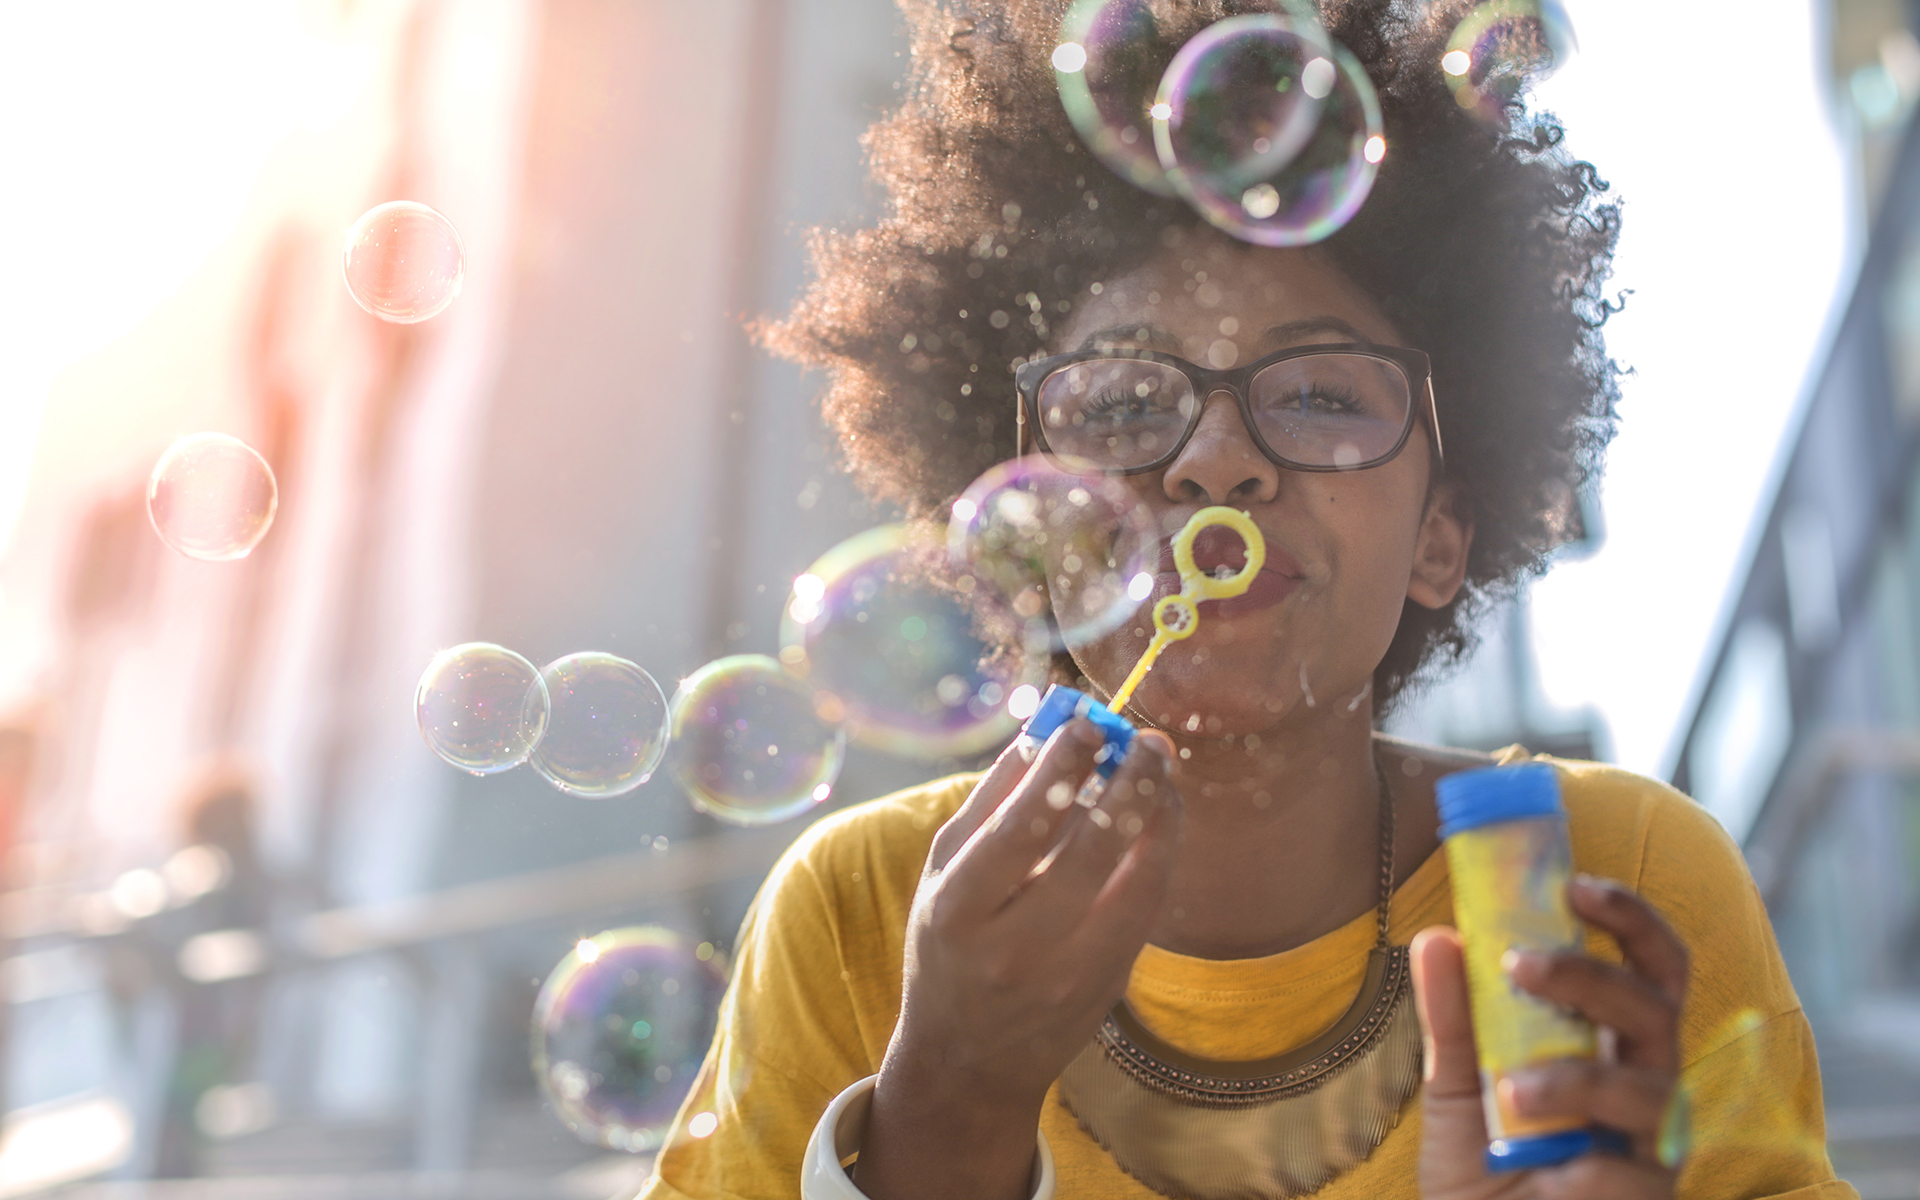 A Practice to Reclaim Your Joy - A Black woman blows soap bubbles outdoors